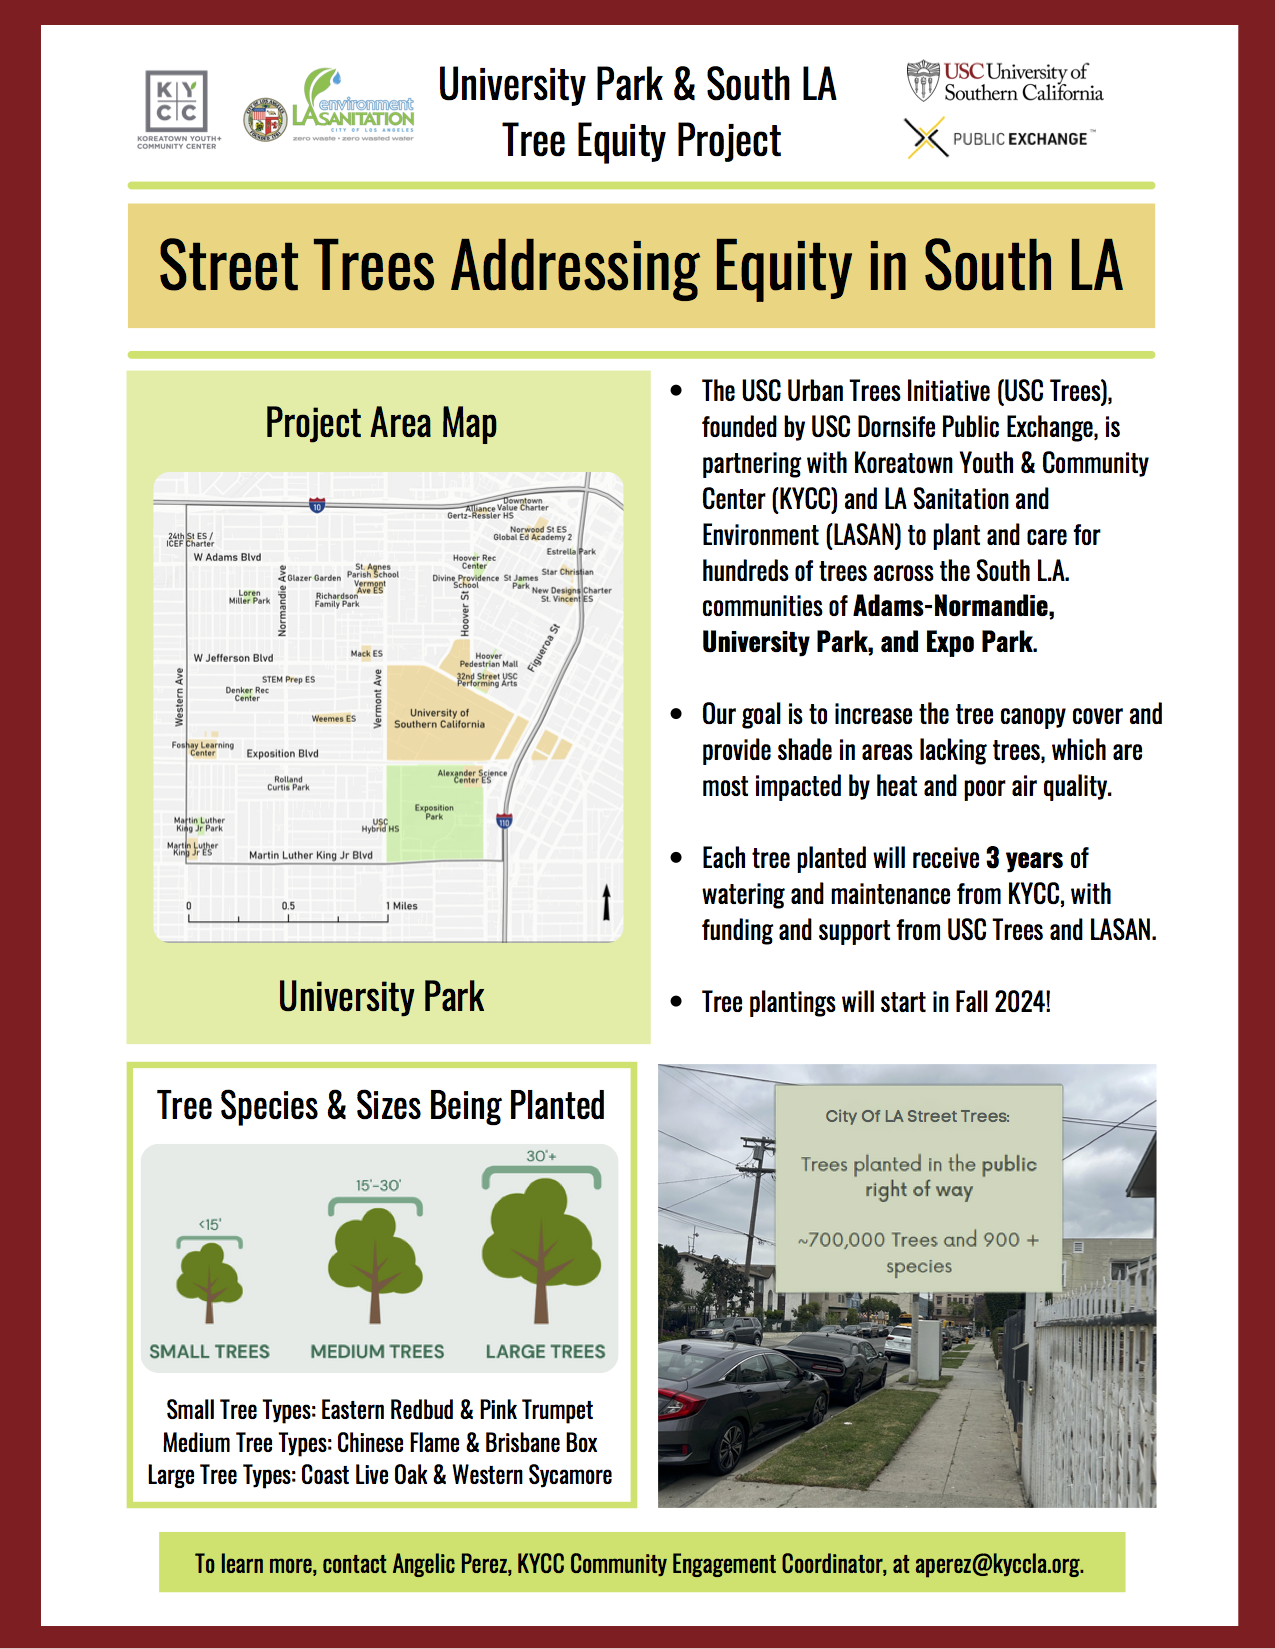 University Park & South LA Tree Equity Project